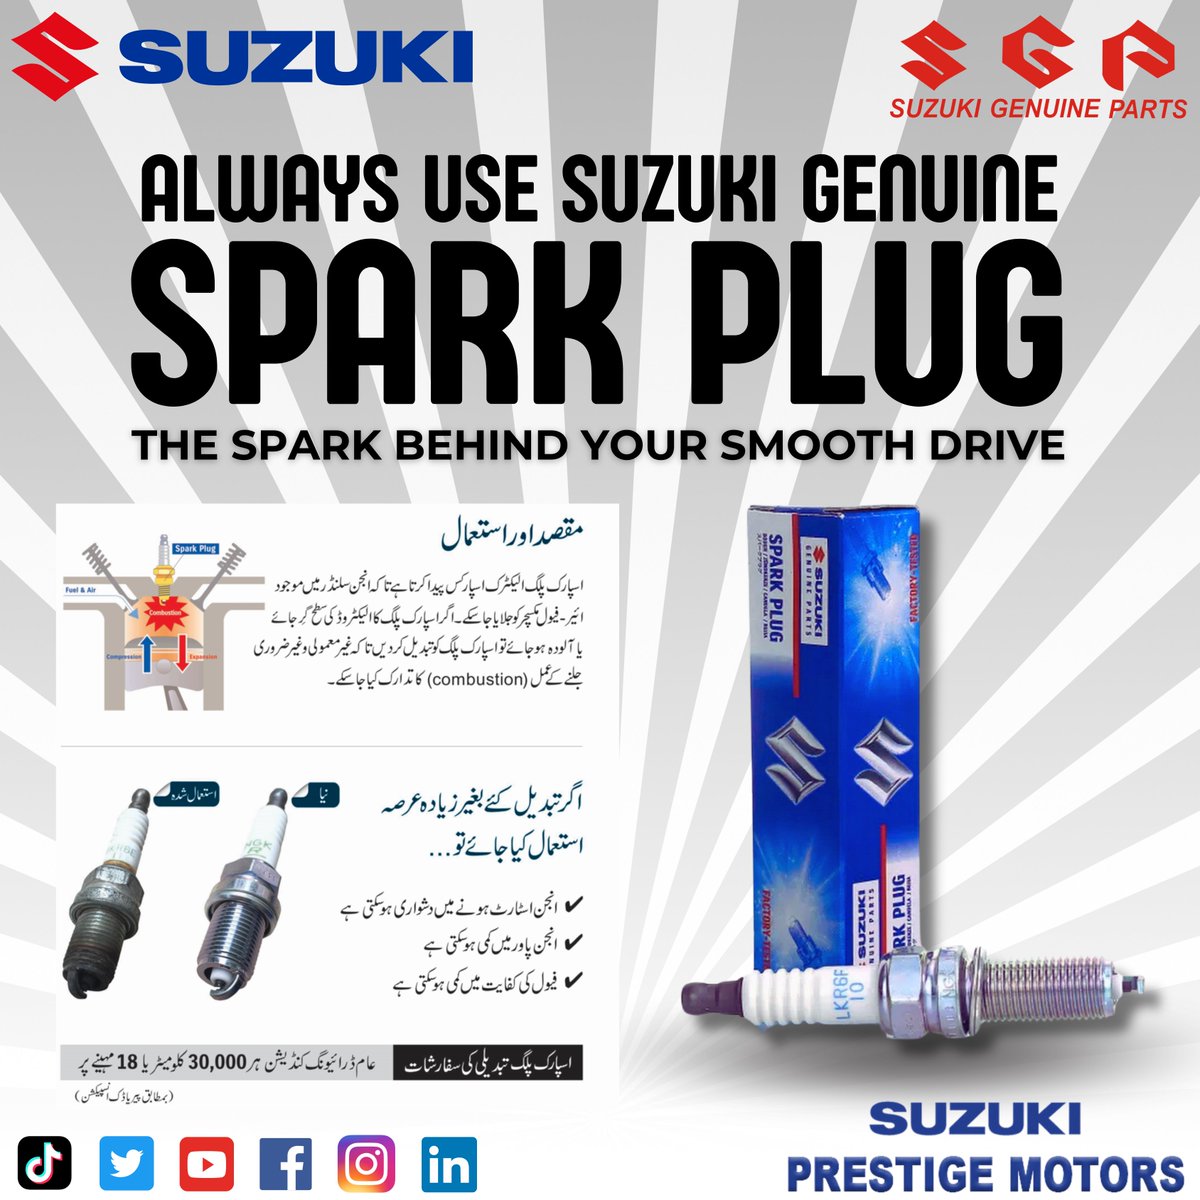 Always Use Suzuki Genuine Spark Plug For Your Suzuki 
Choose excellence. Always trust Suzuki Genuine Parts
#SuzukiQuality #suzuki #PakSuzuki #SuzukiPakistan #suzukiprestigemotors #likesforlike #likeforfollow #comment #suzukigenuineparts #GenuineParts #foryou